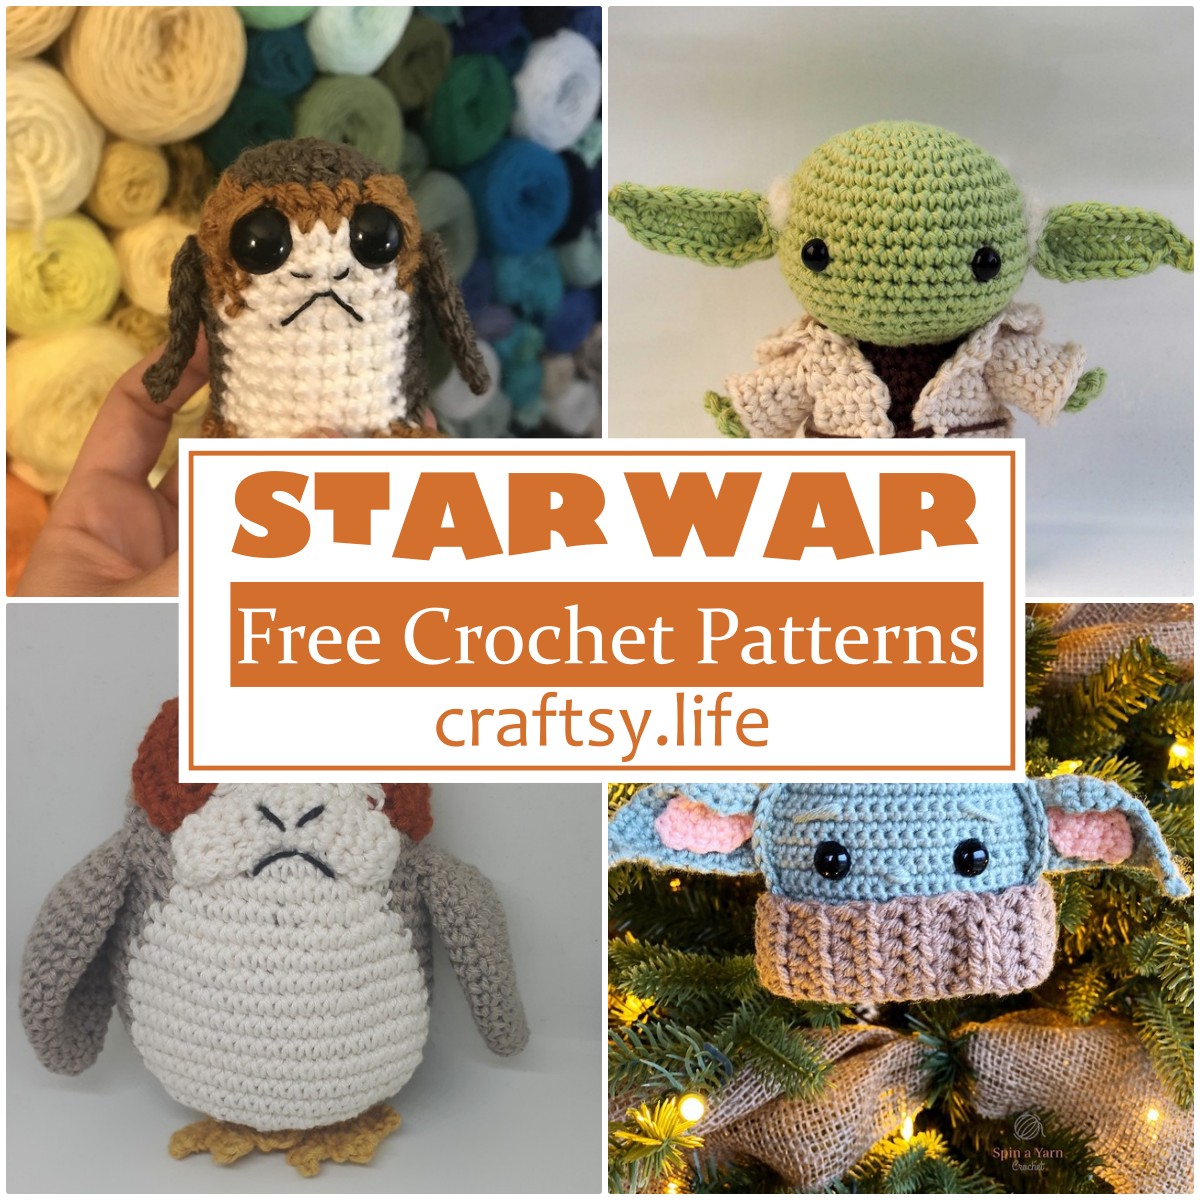 Free Crochet Star War Patterns